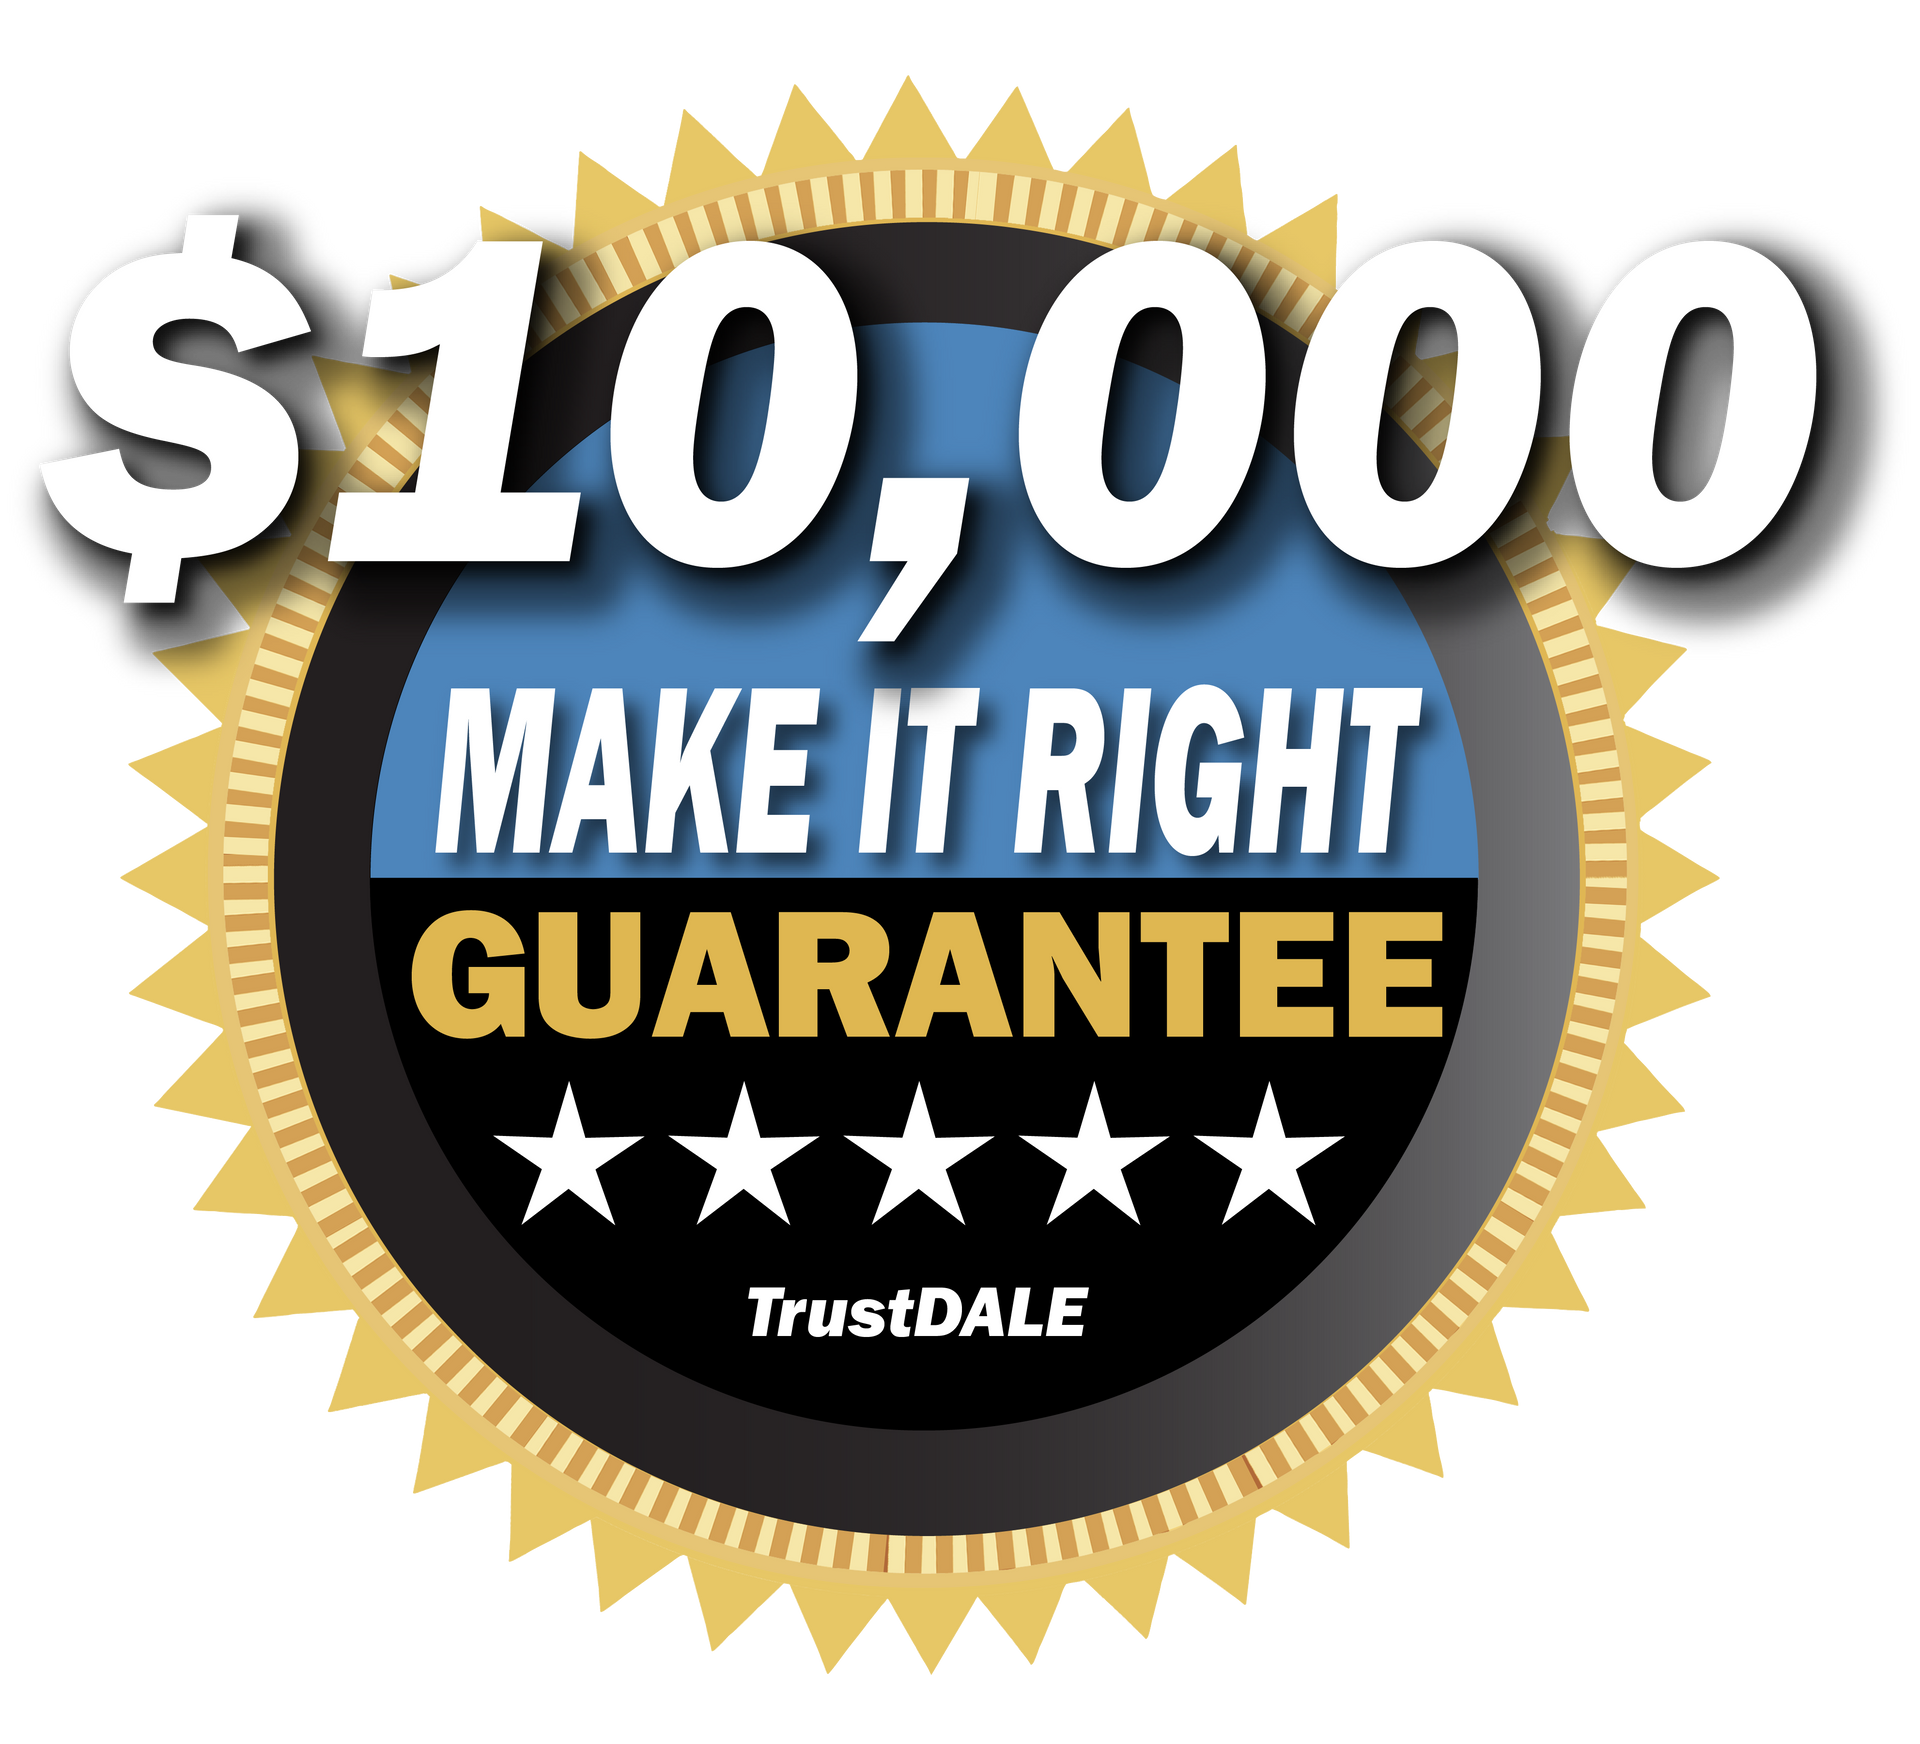 trustdale make it right guarantee